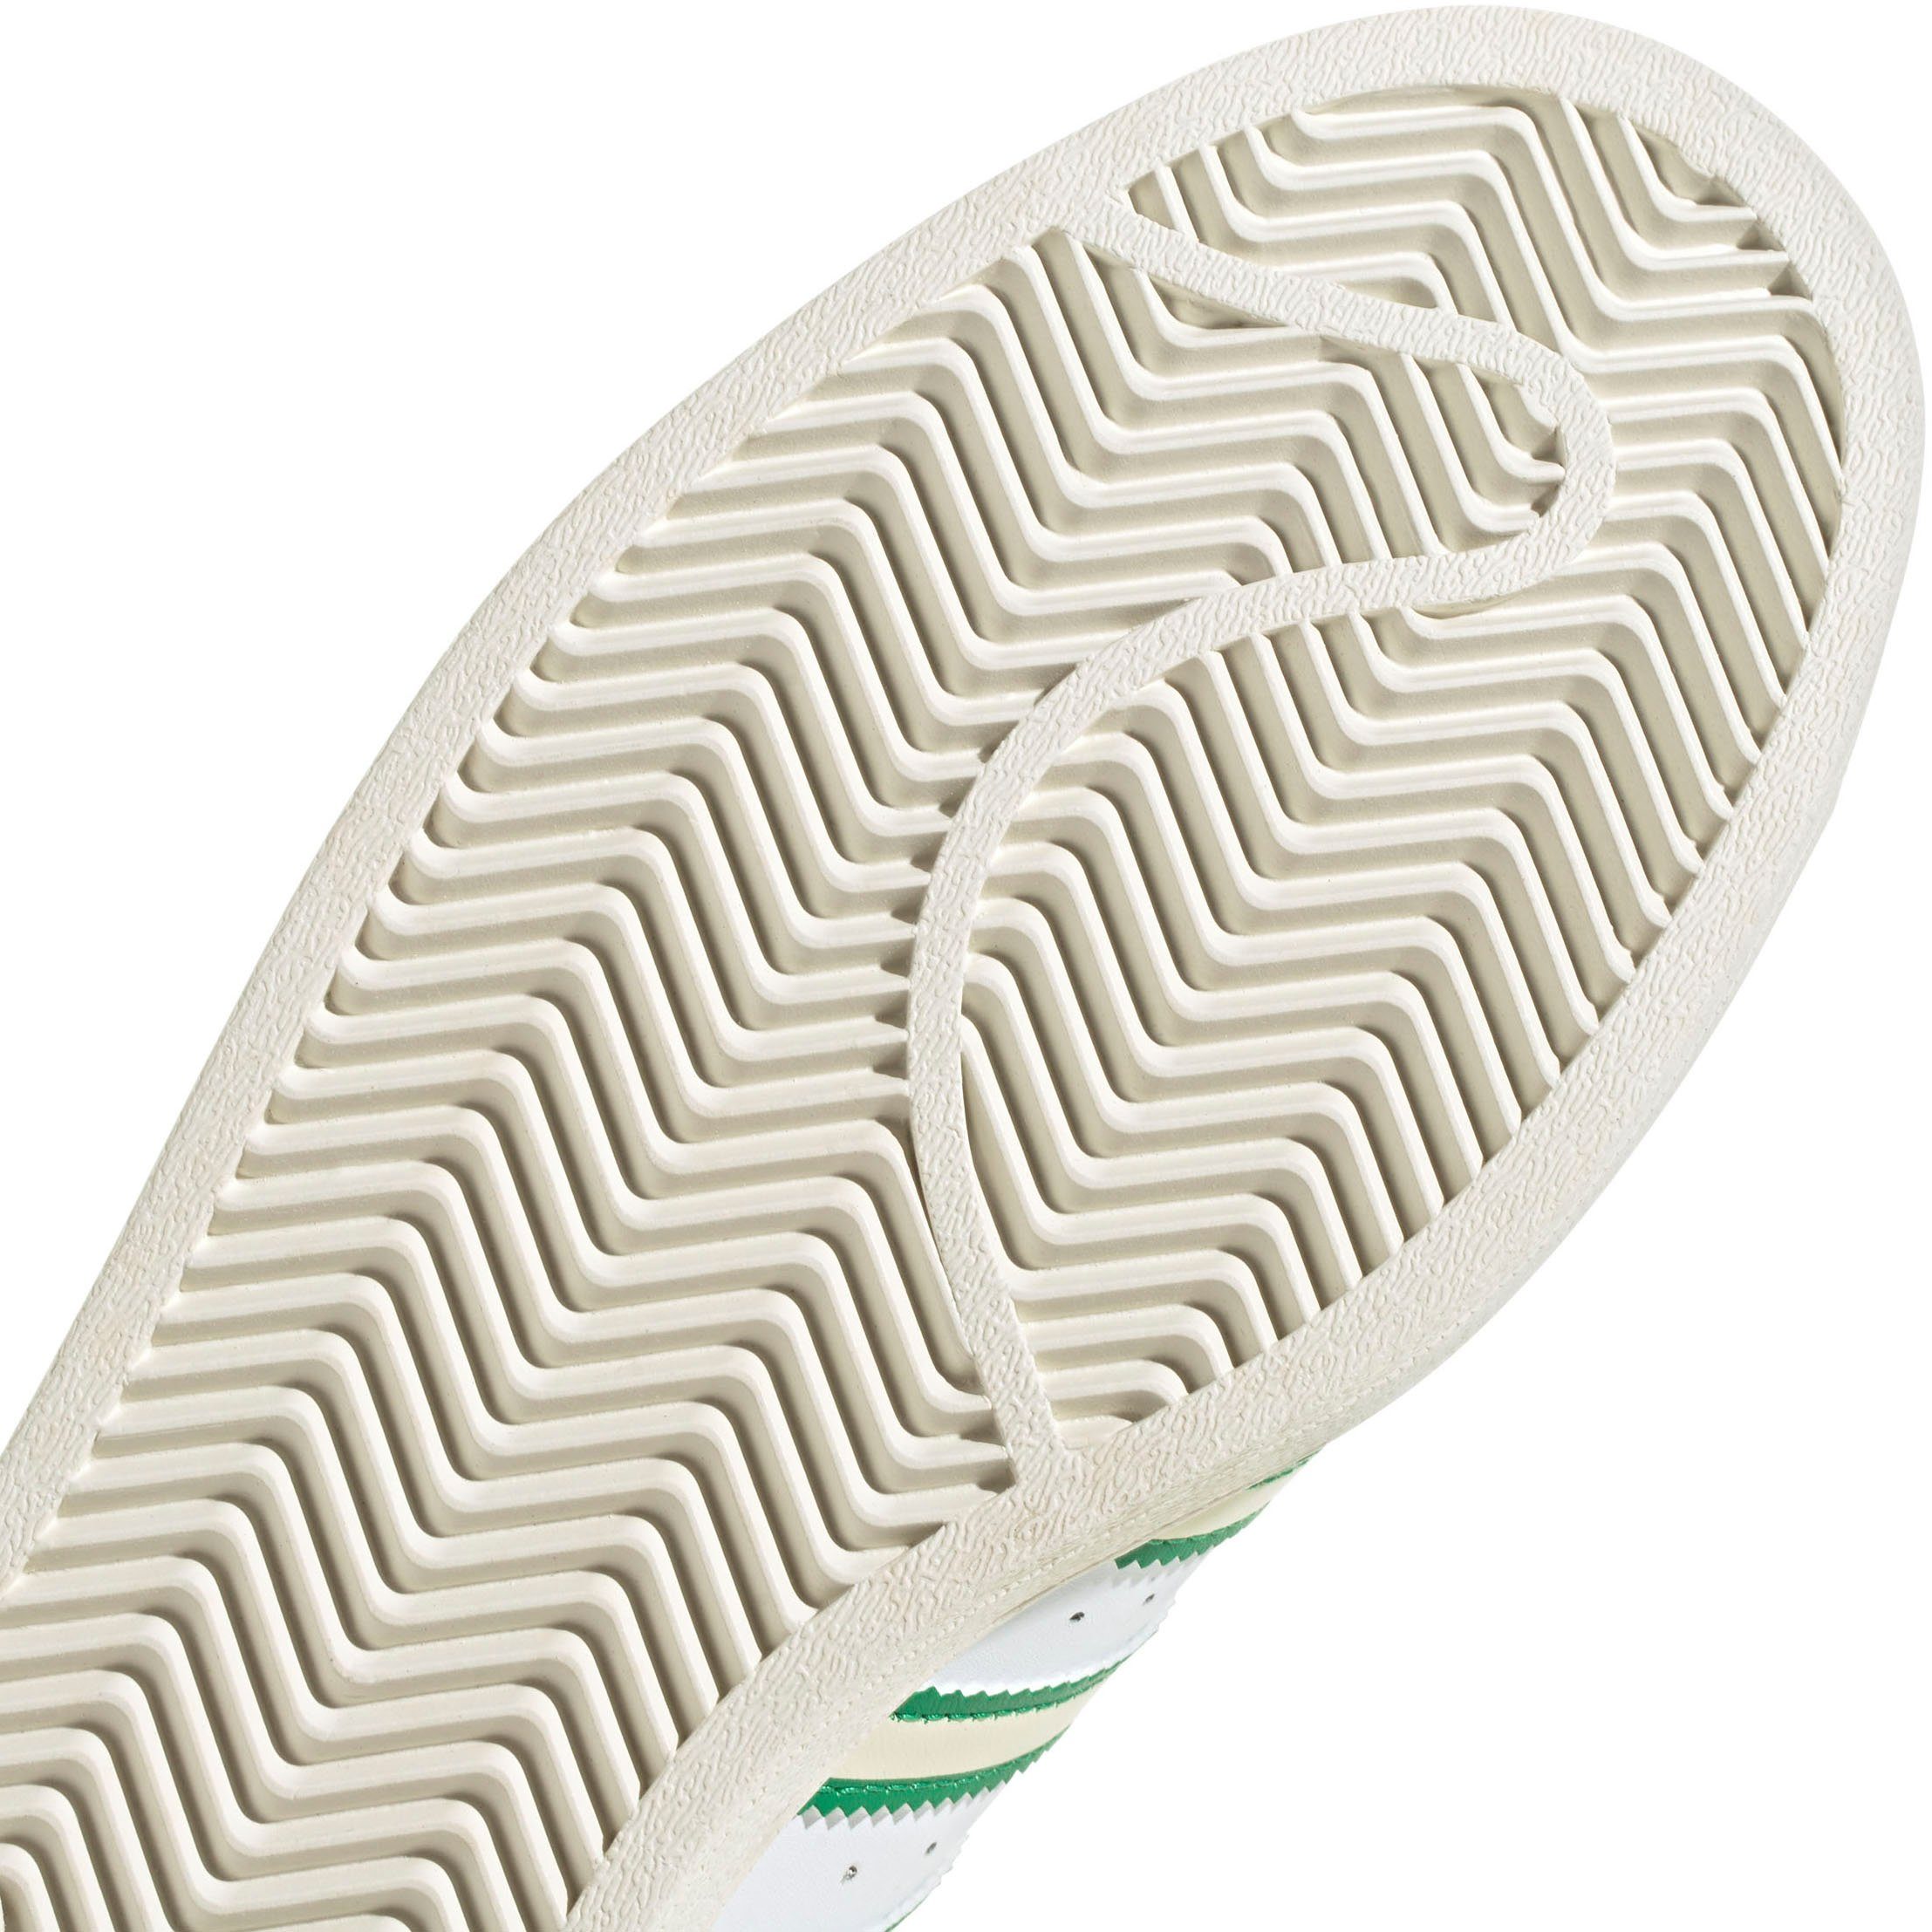 weiß-grün adidas Sneaker SUPERSTAR Originals